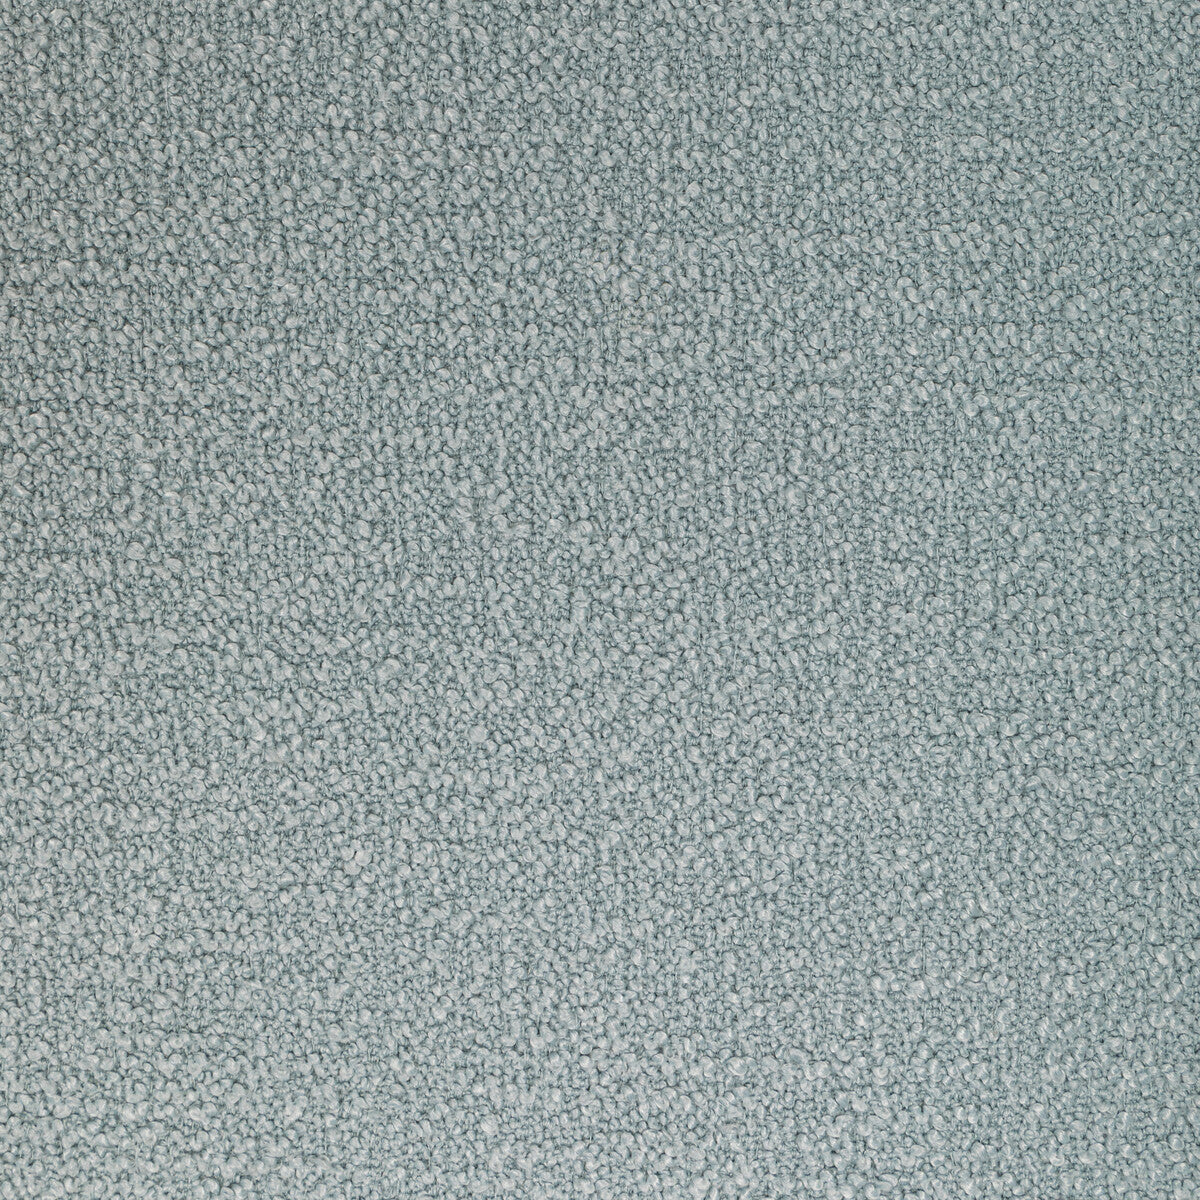 Kravet Smart fabric in 36857-15 color - pattern 36857.15.0 - by Kravet Smart in the Performance Kravetarmor collection